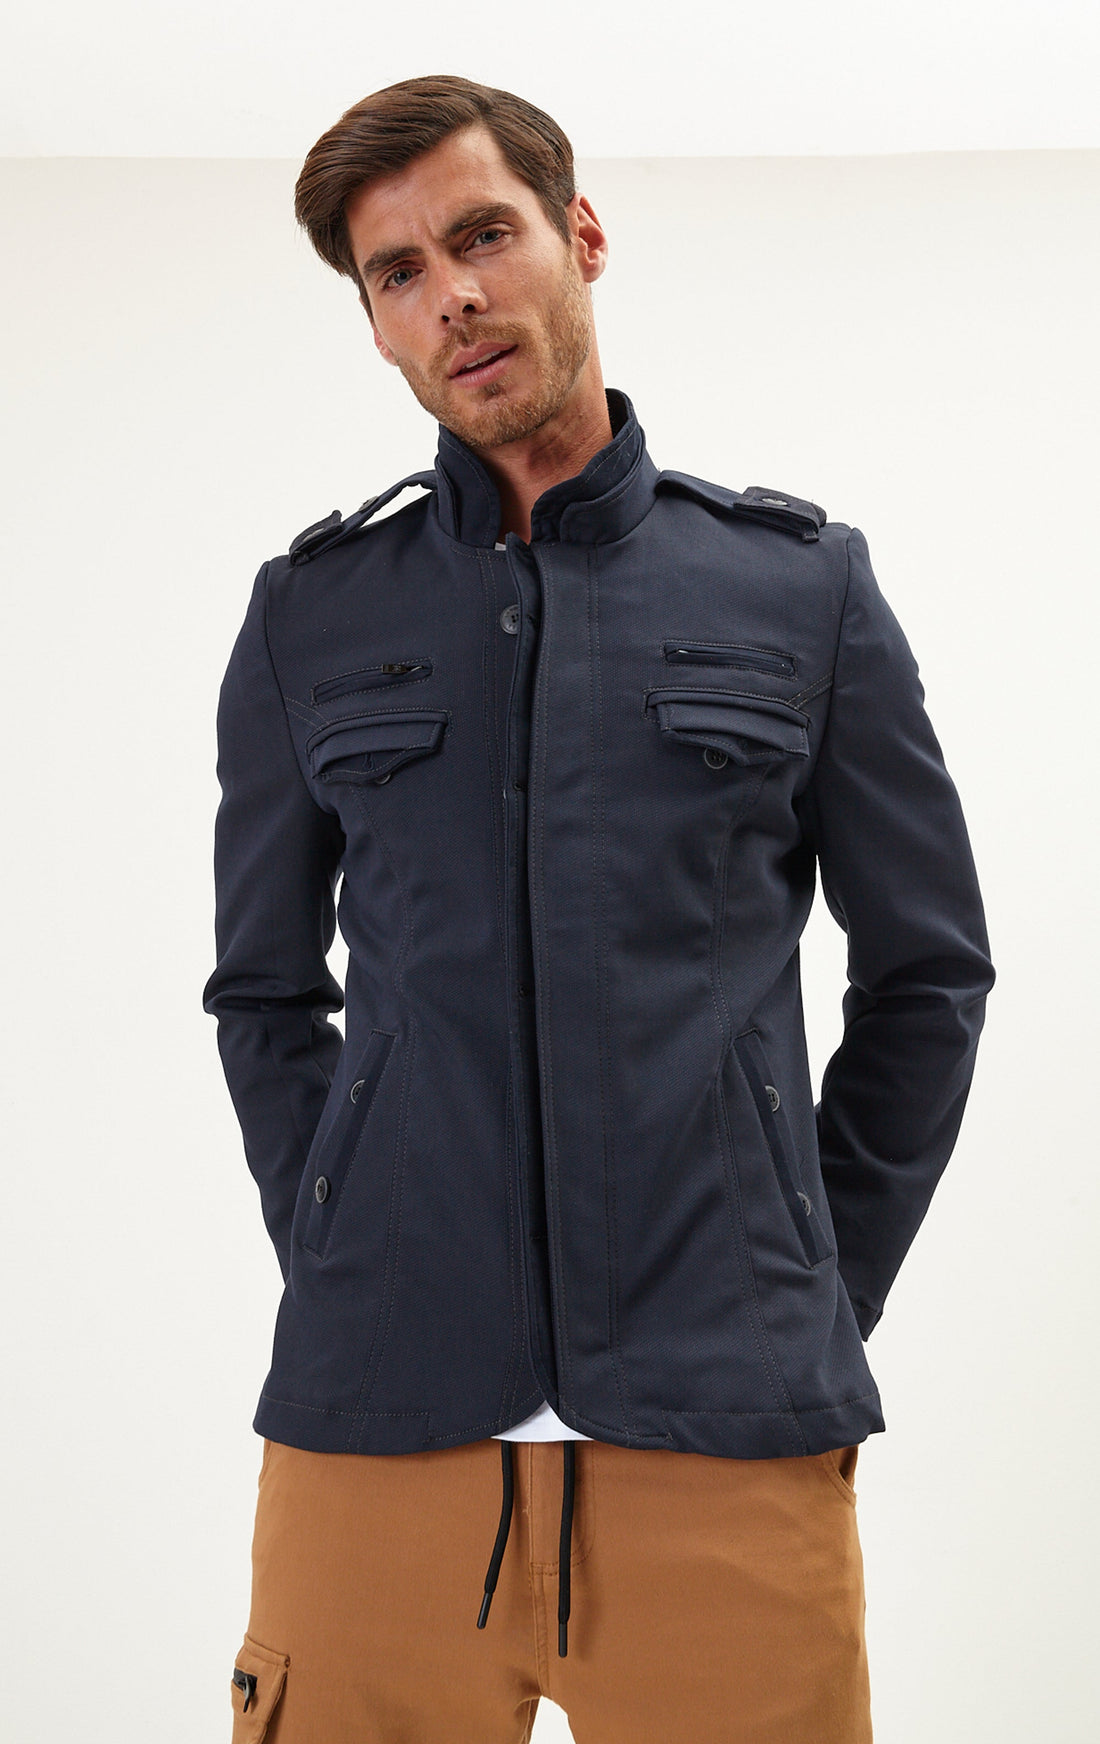 N° 5258 RT Epaulette Shoulder Stand Collar Jacket  - NAVY - Ron Tomson